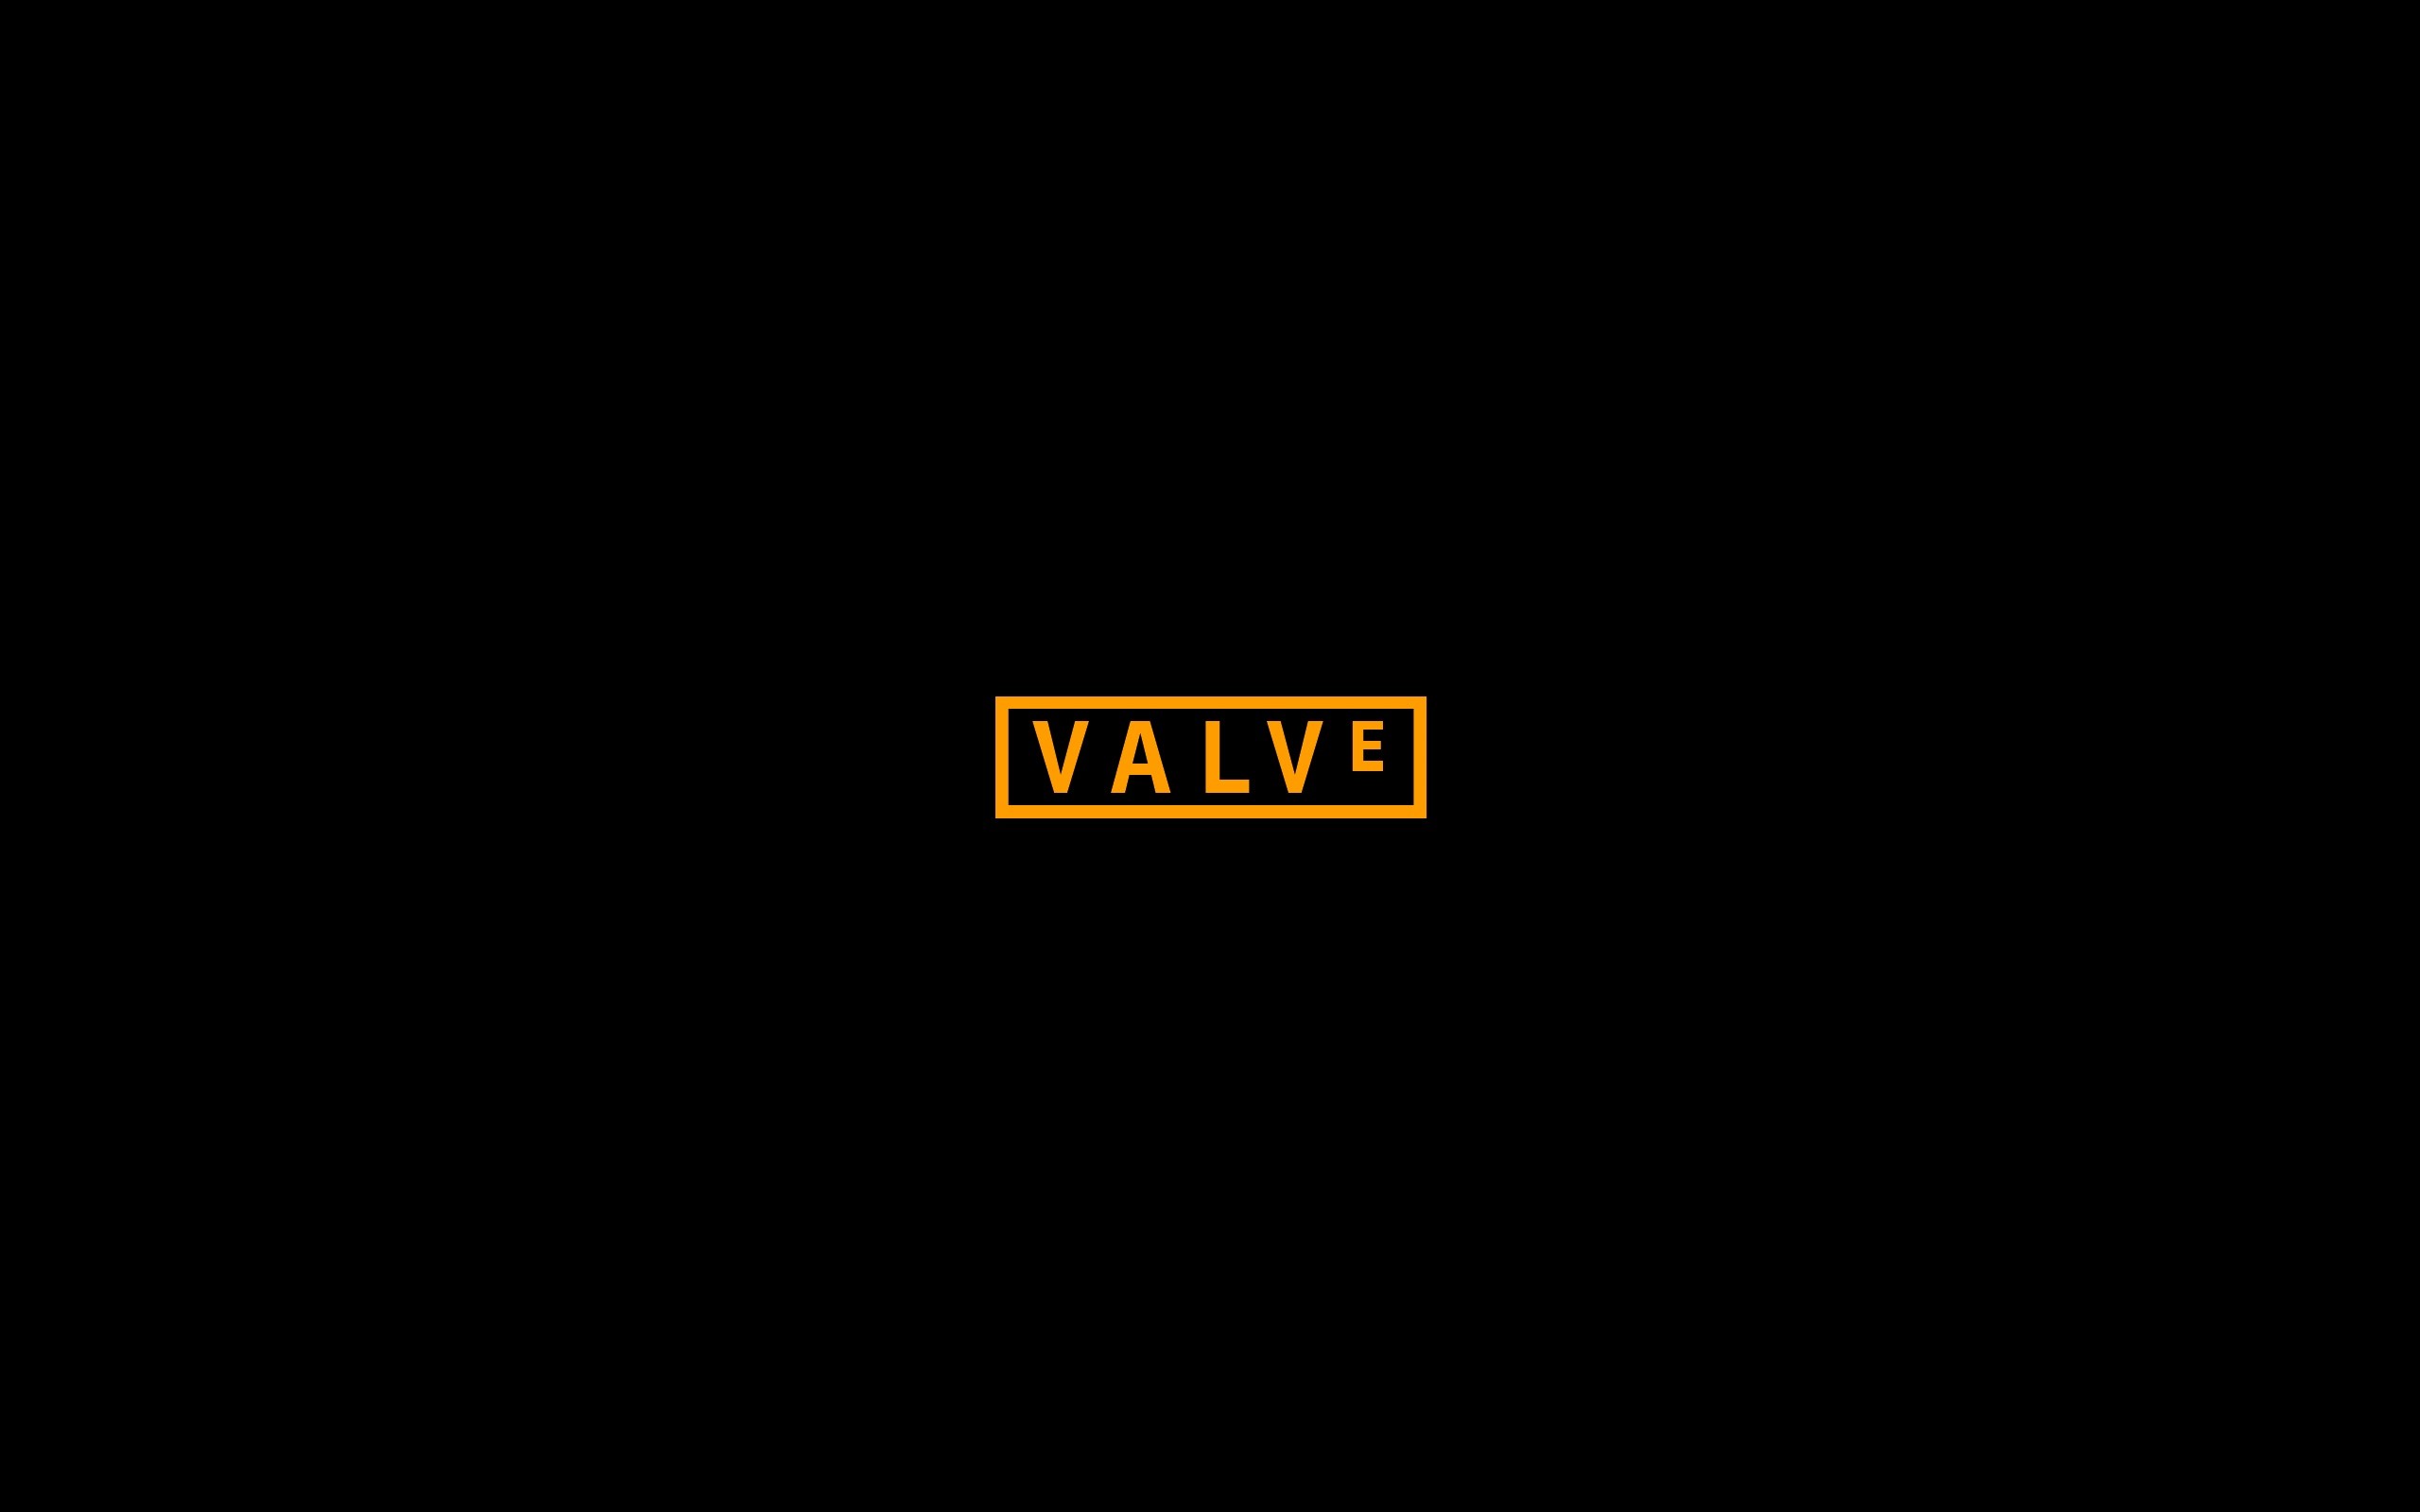 2560x1600 Valve Logo Wallpaper